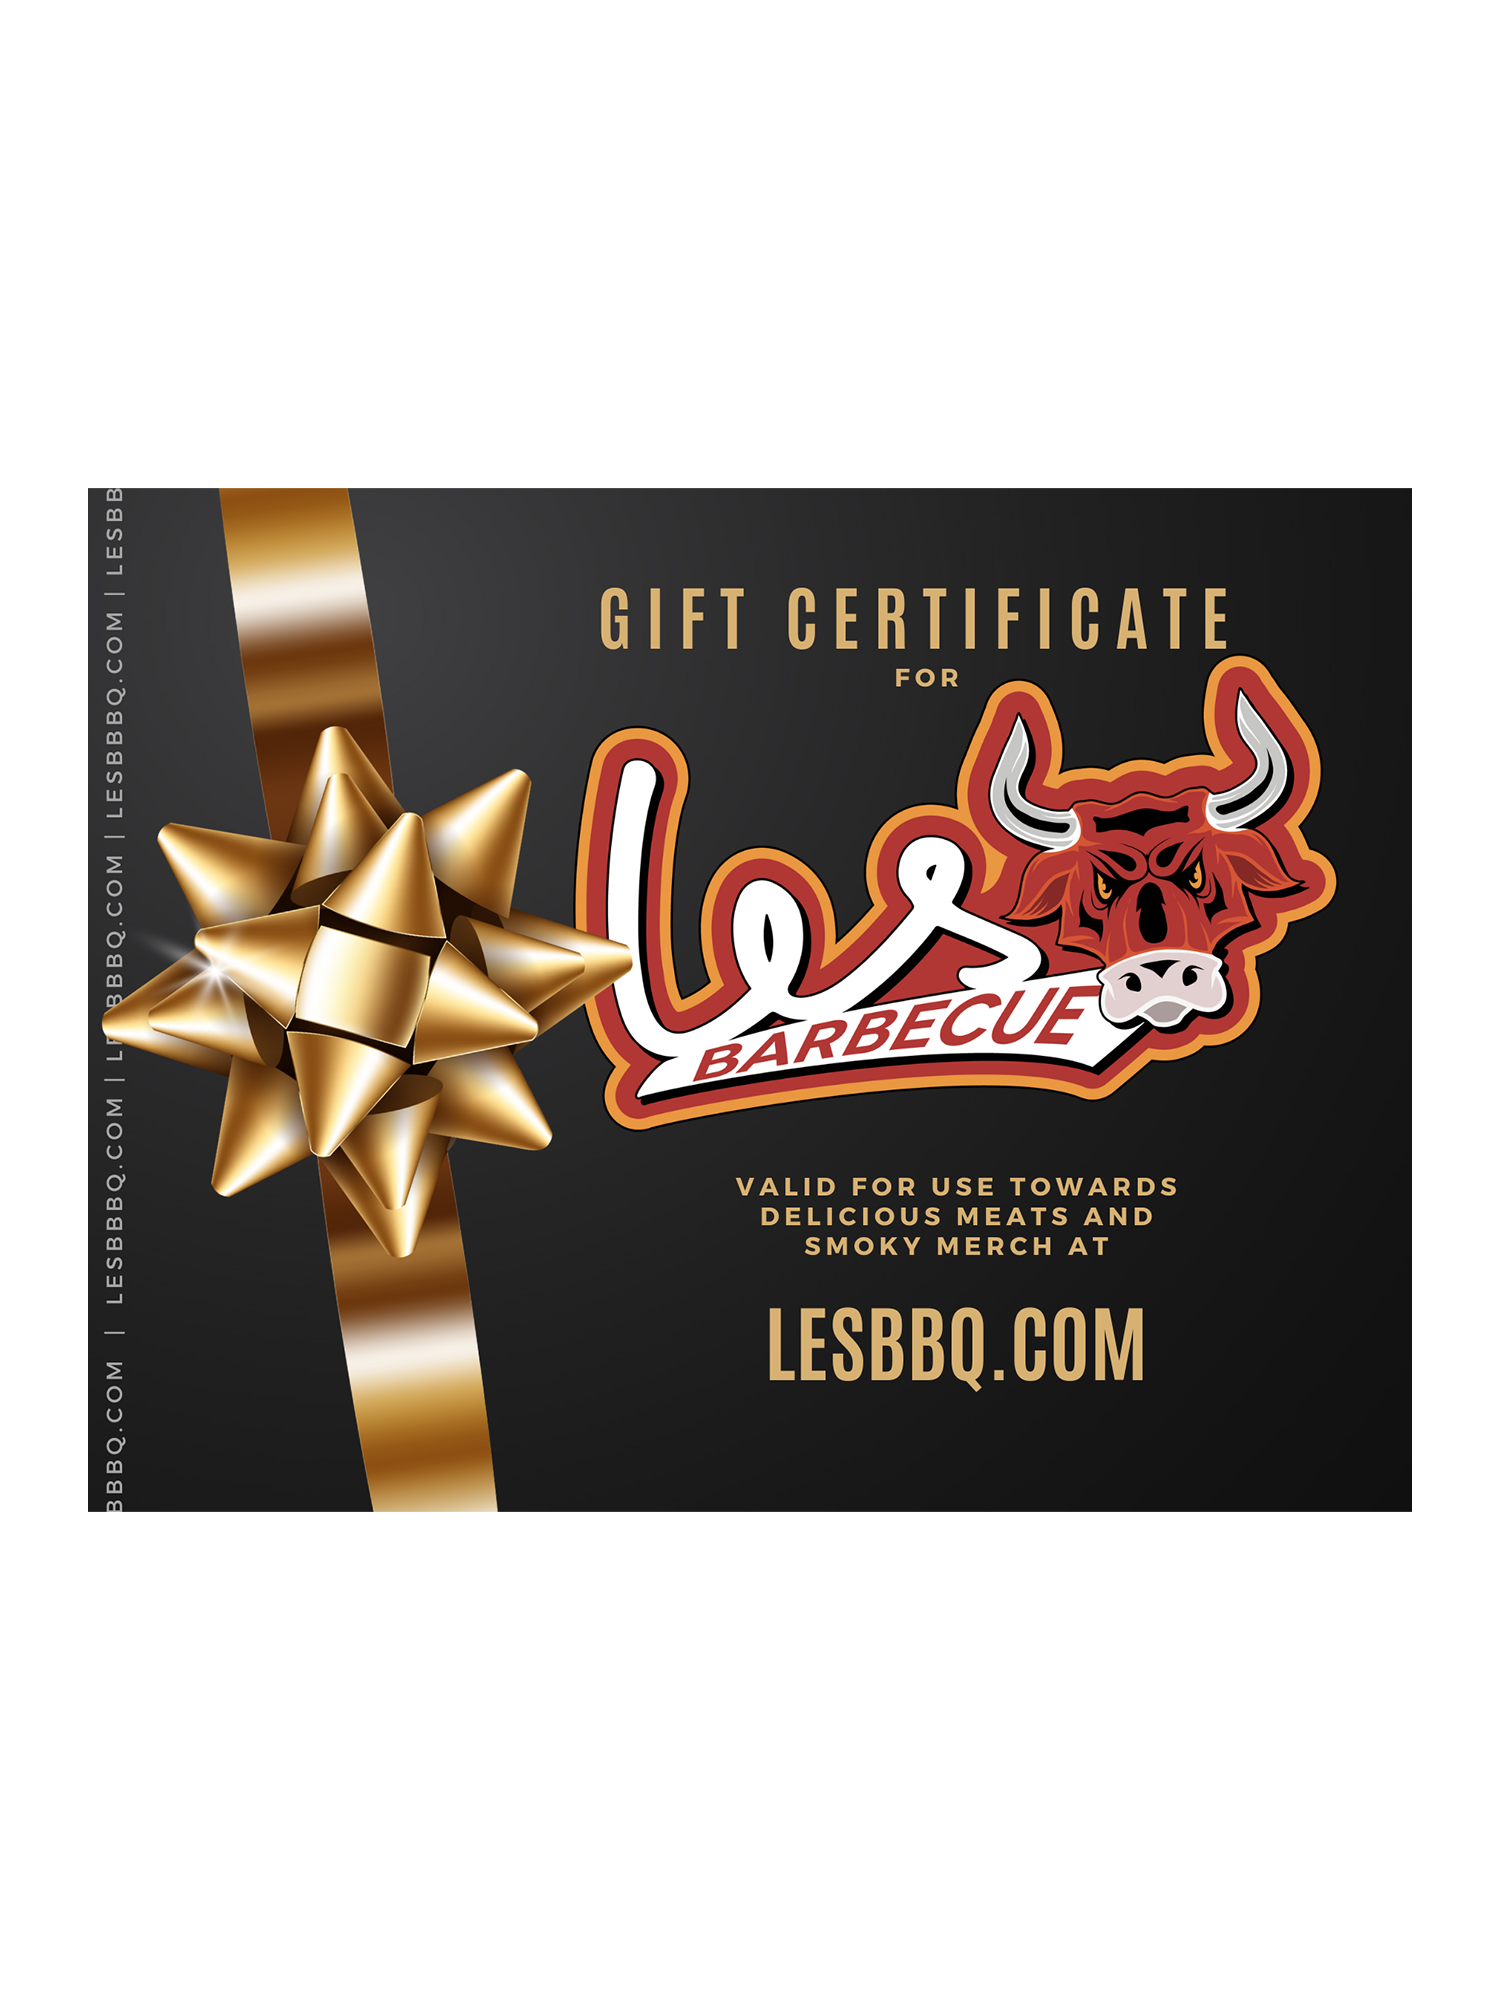 LesBBQ.com Gift Certificate